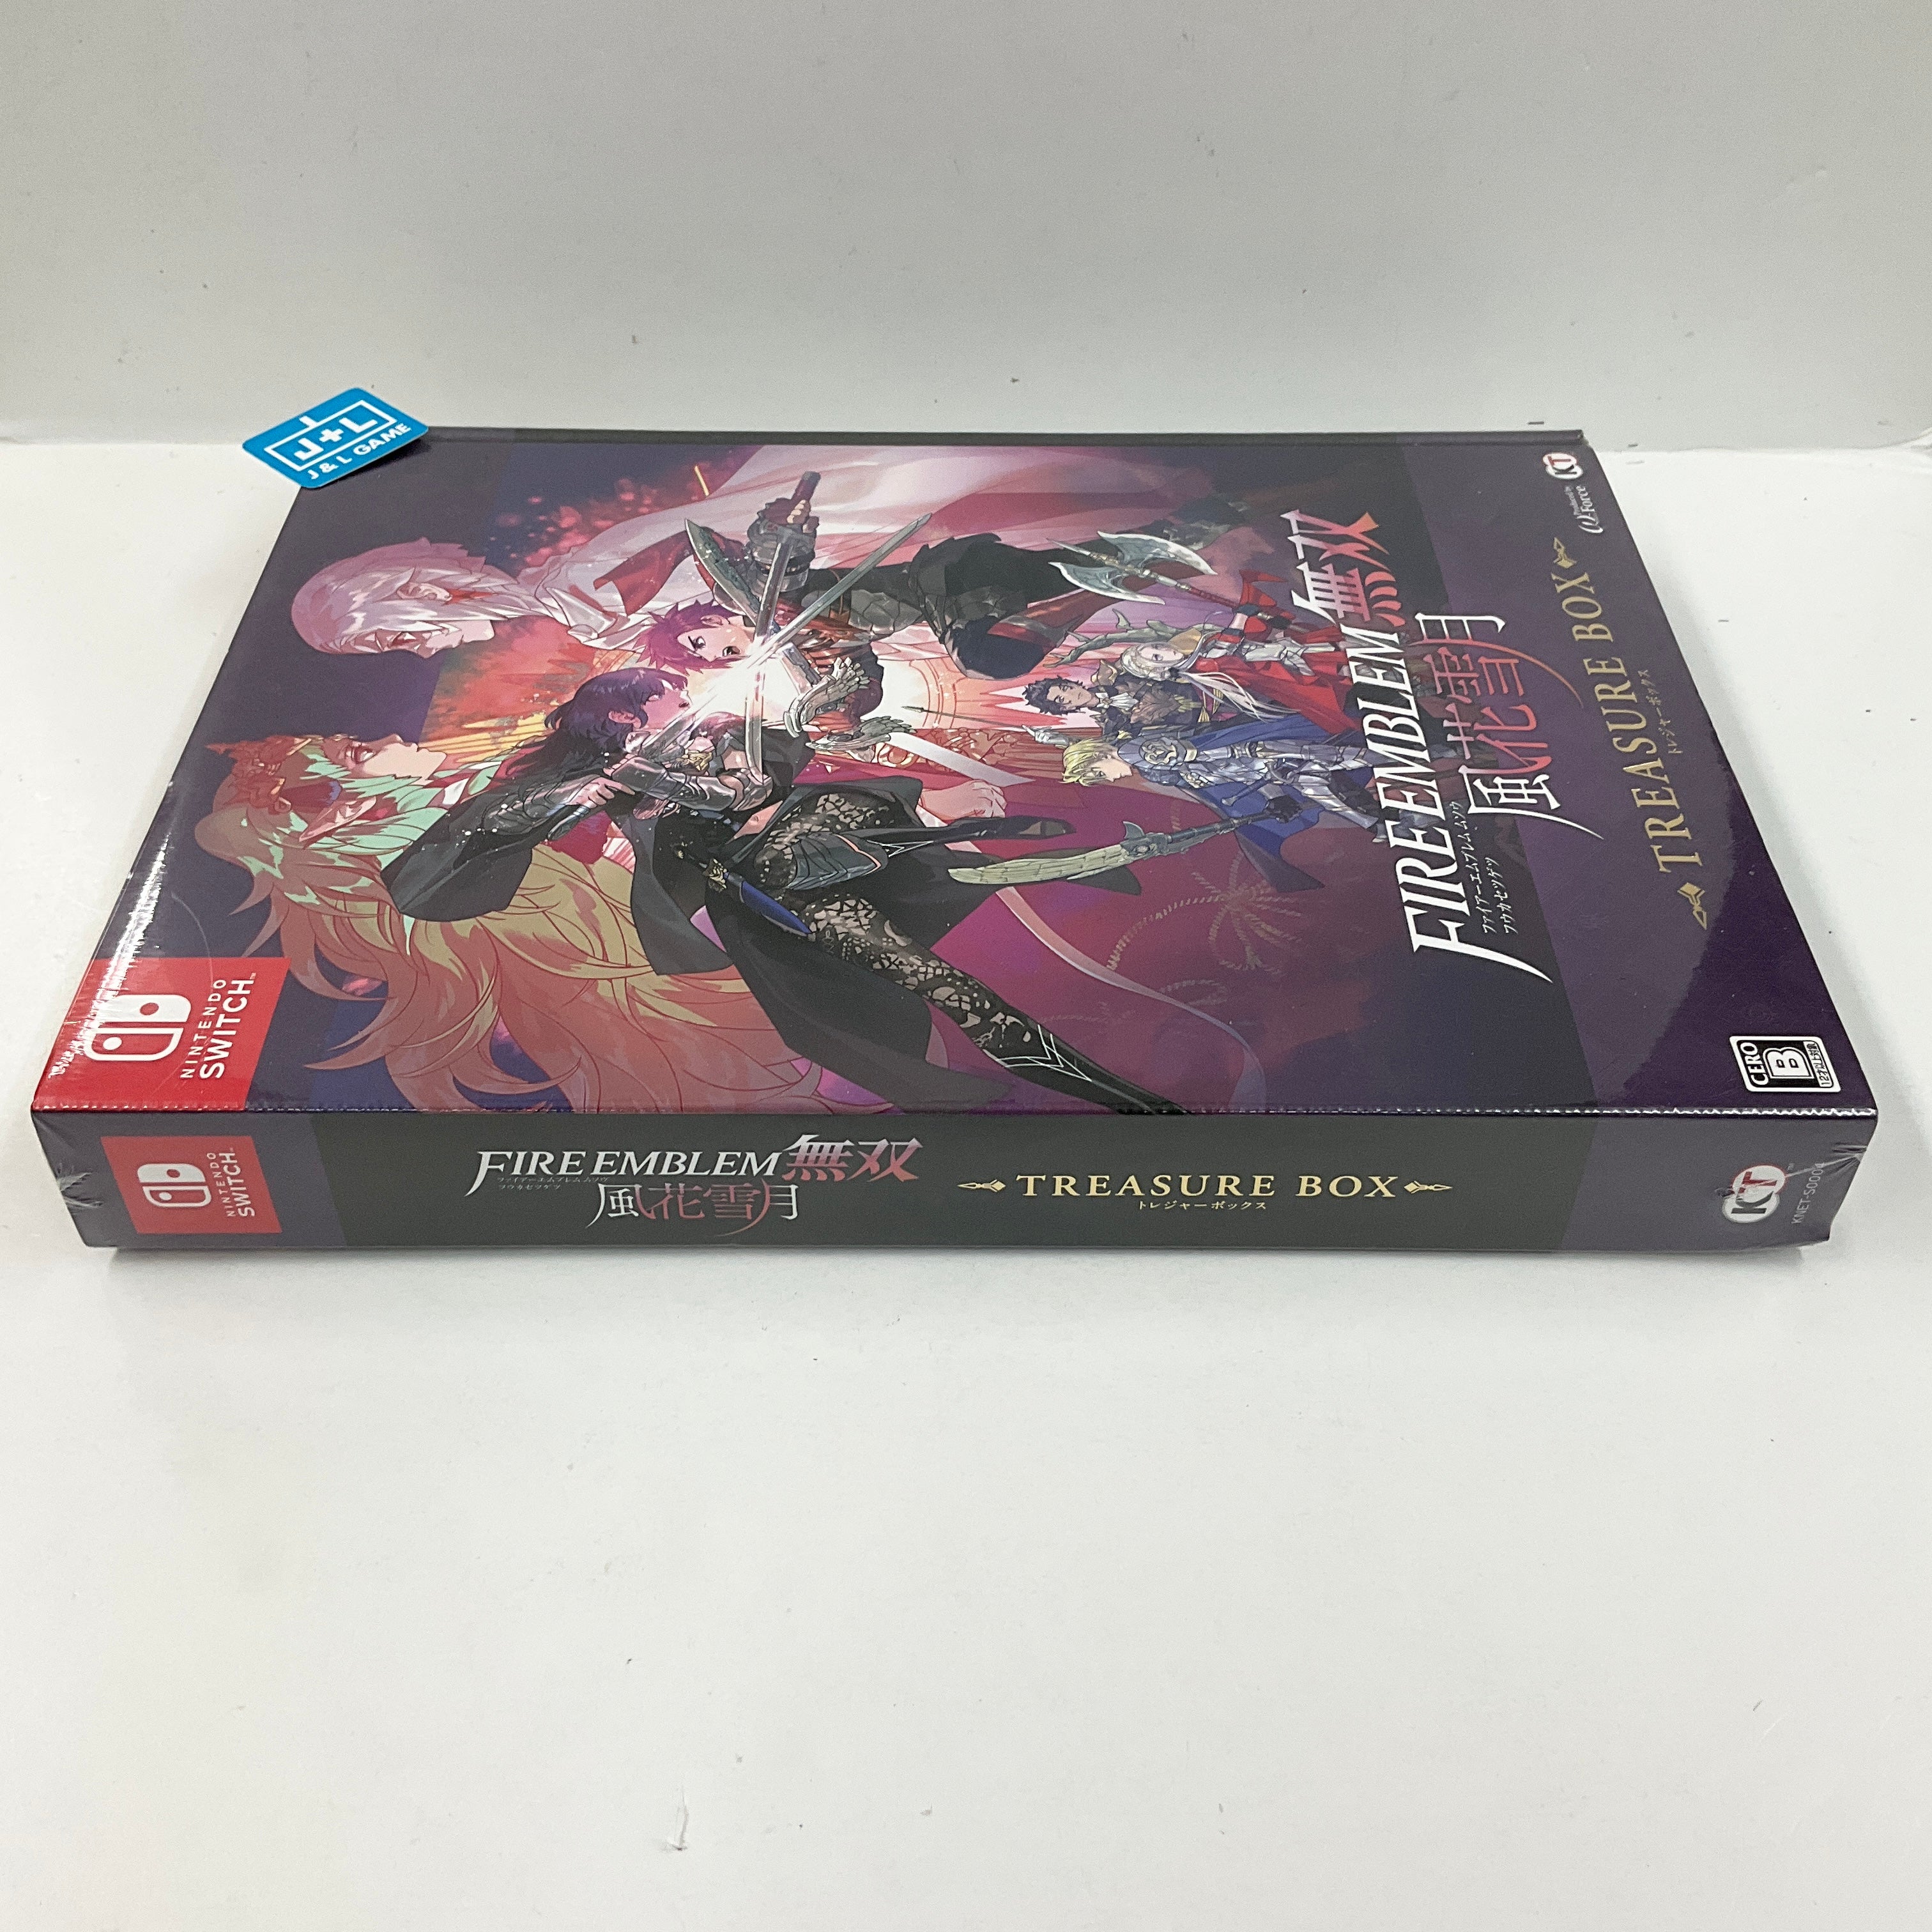 Fire Emblem Warriors: Three Hopes - Treasure Box Limited Edition - (NSW) Nintendo Switch (Japanese Import) Video Games Nintendo   